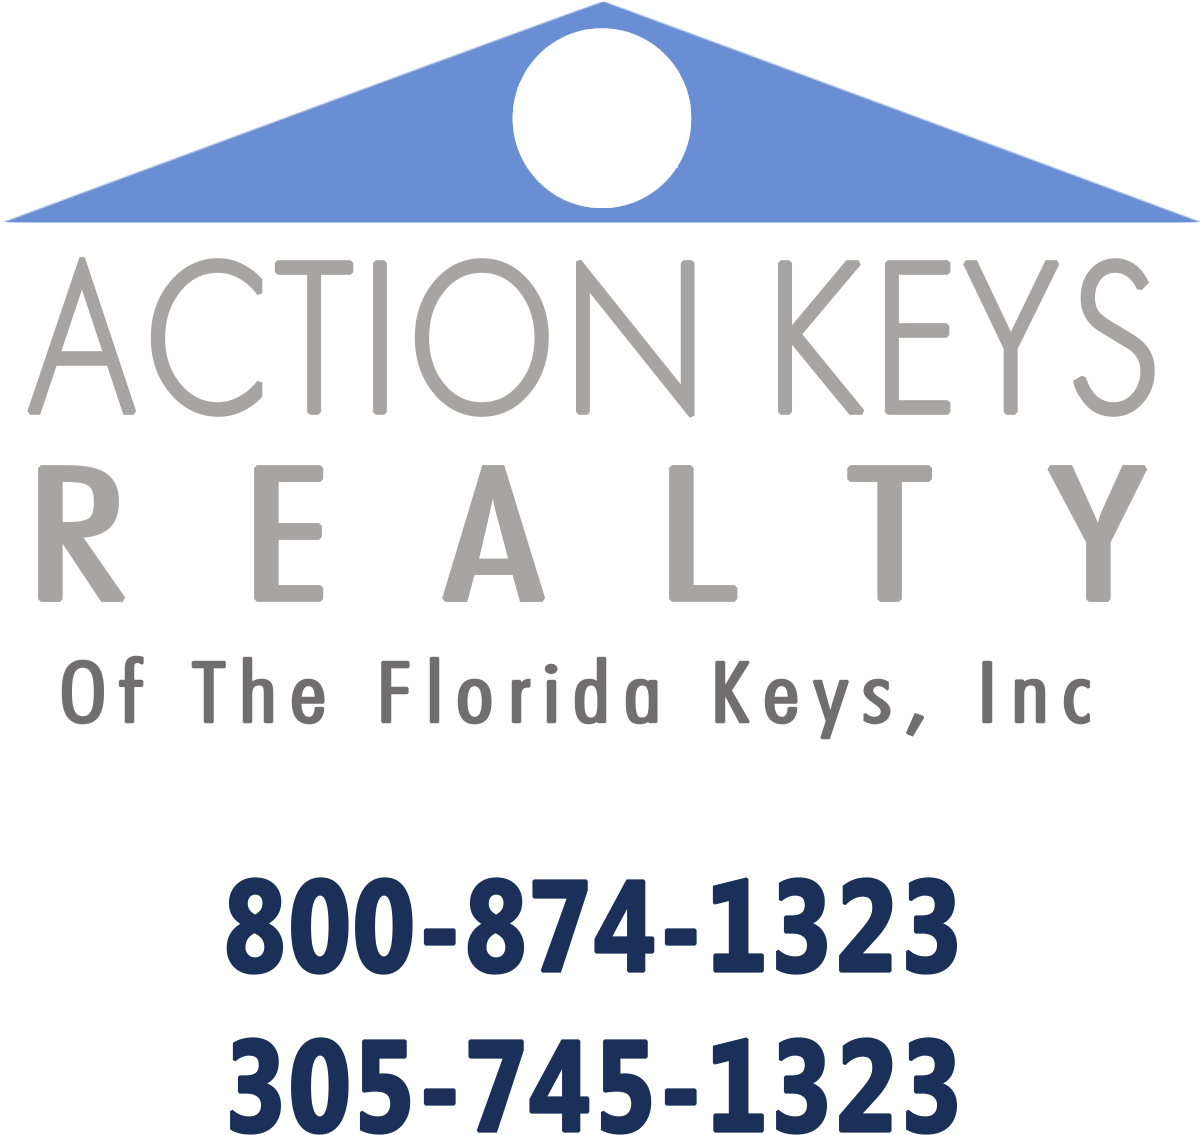 Action Keys Realty of the Florida Keys